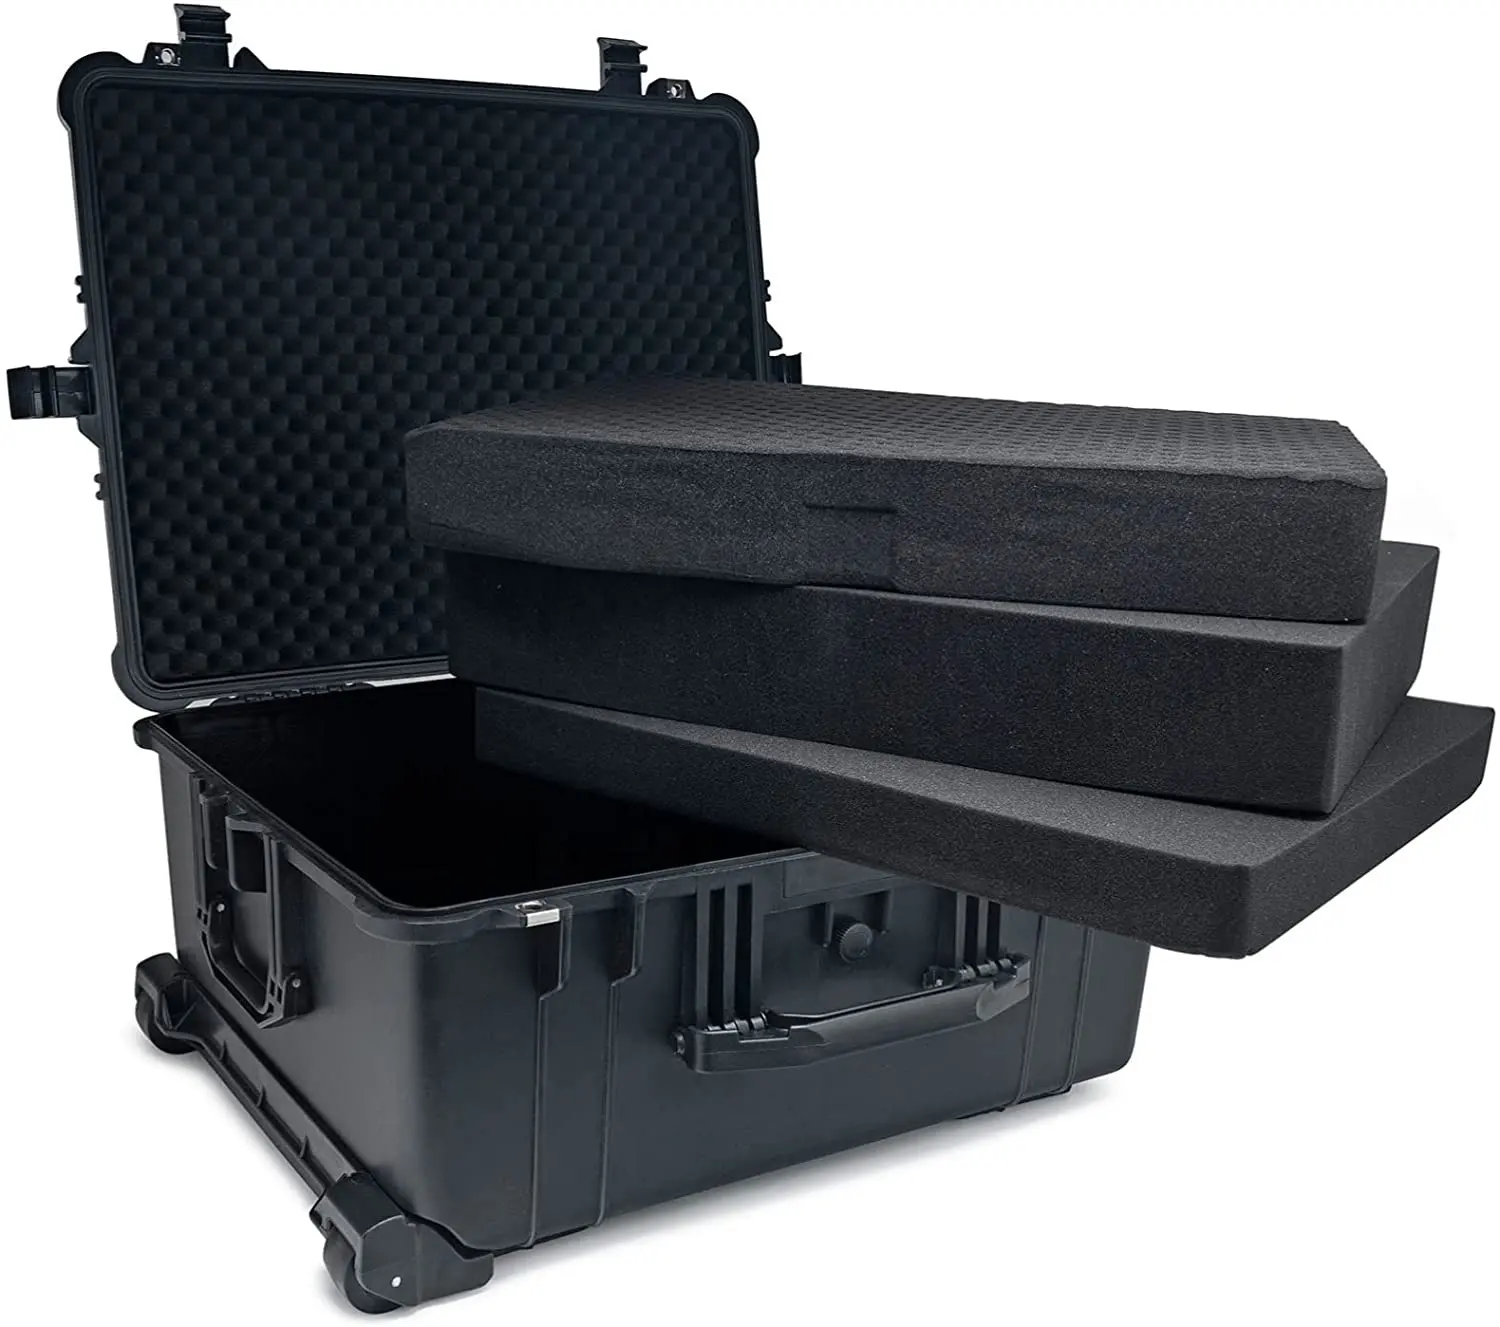 GD5013 Big trolley plastic waterproof rugged equipment tool box DJI custom hard case